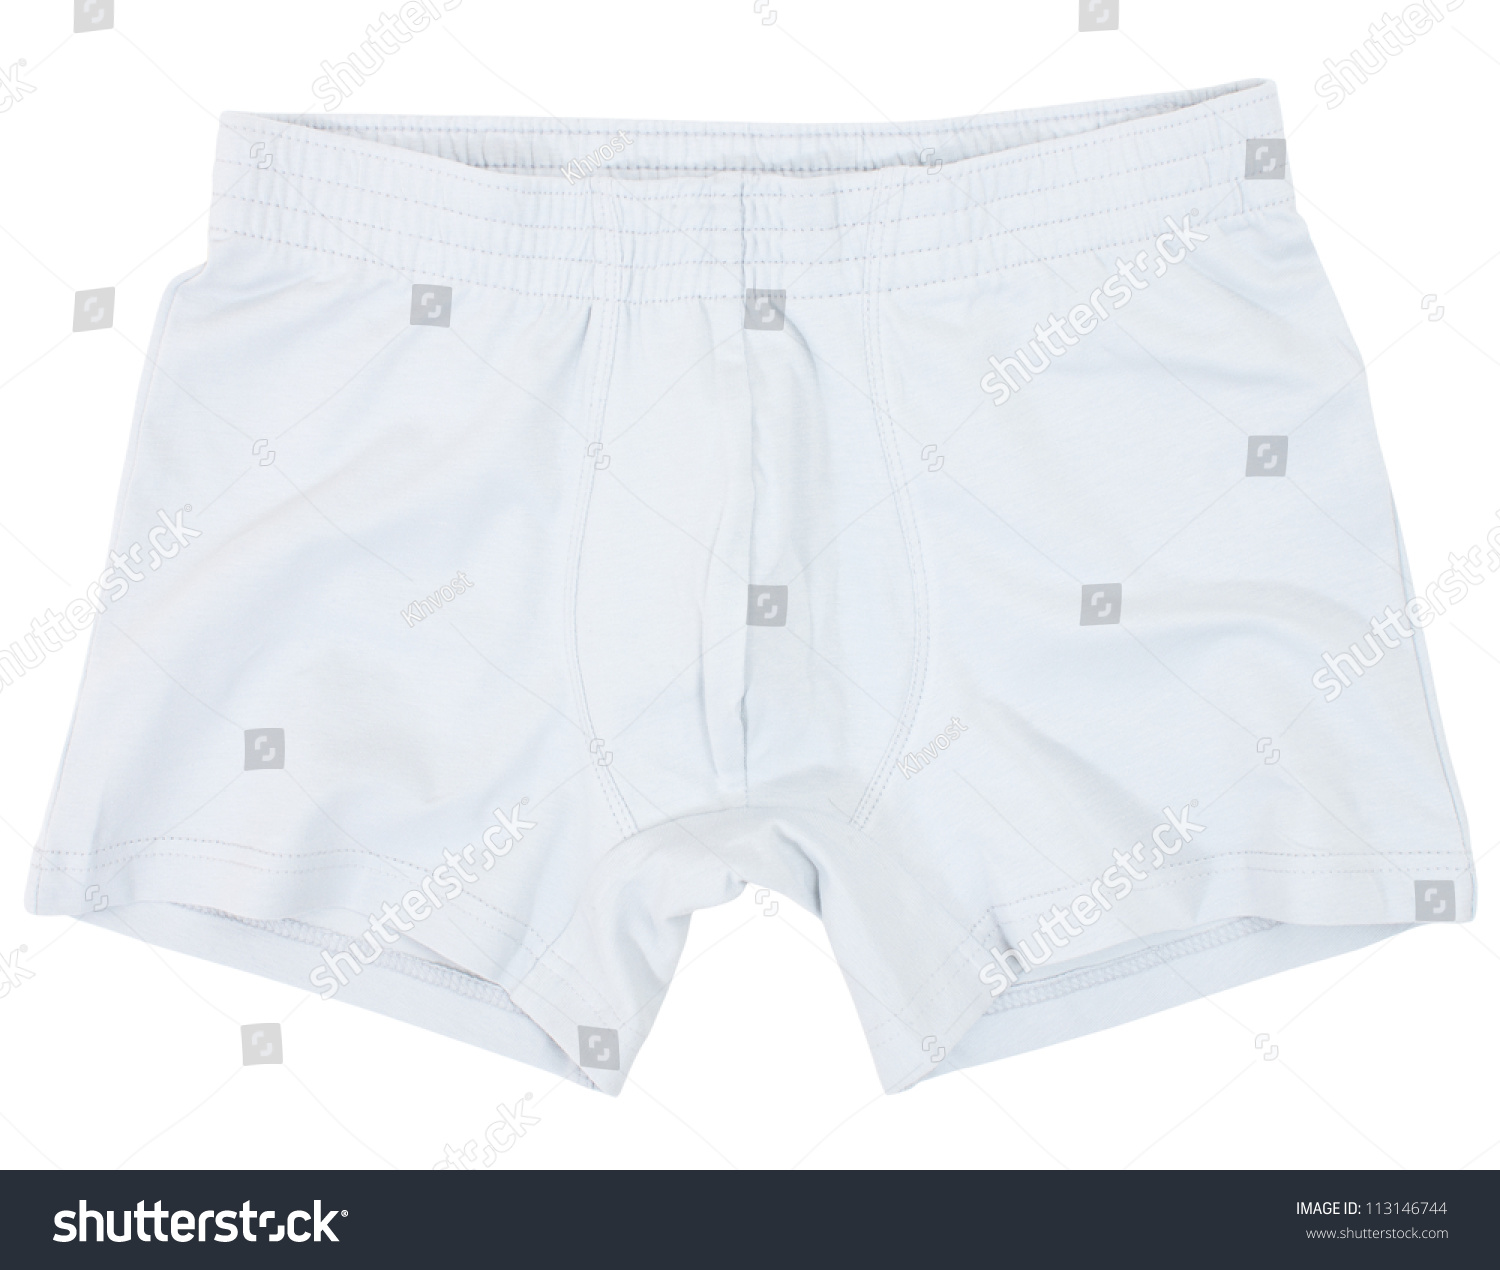 Male Underwear Isolated On White Background Stock Photo 113146744 ...